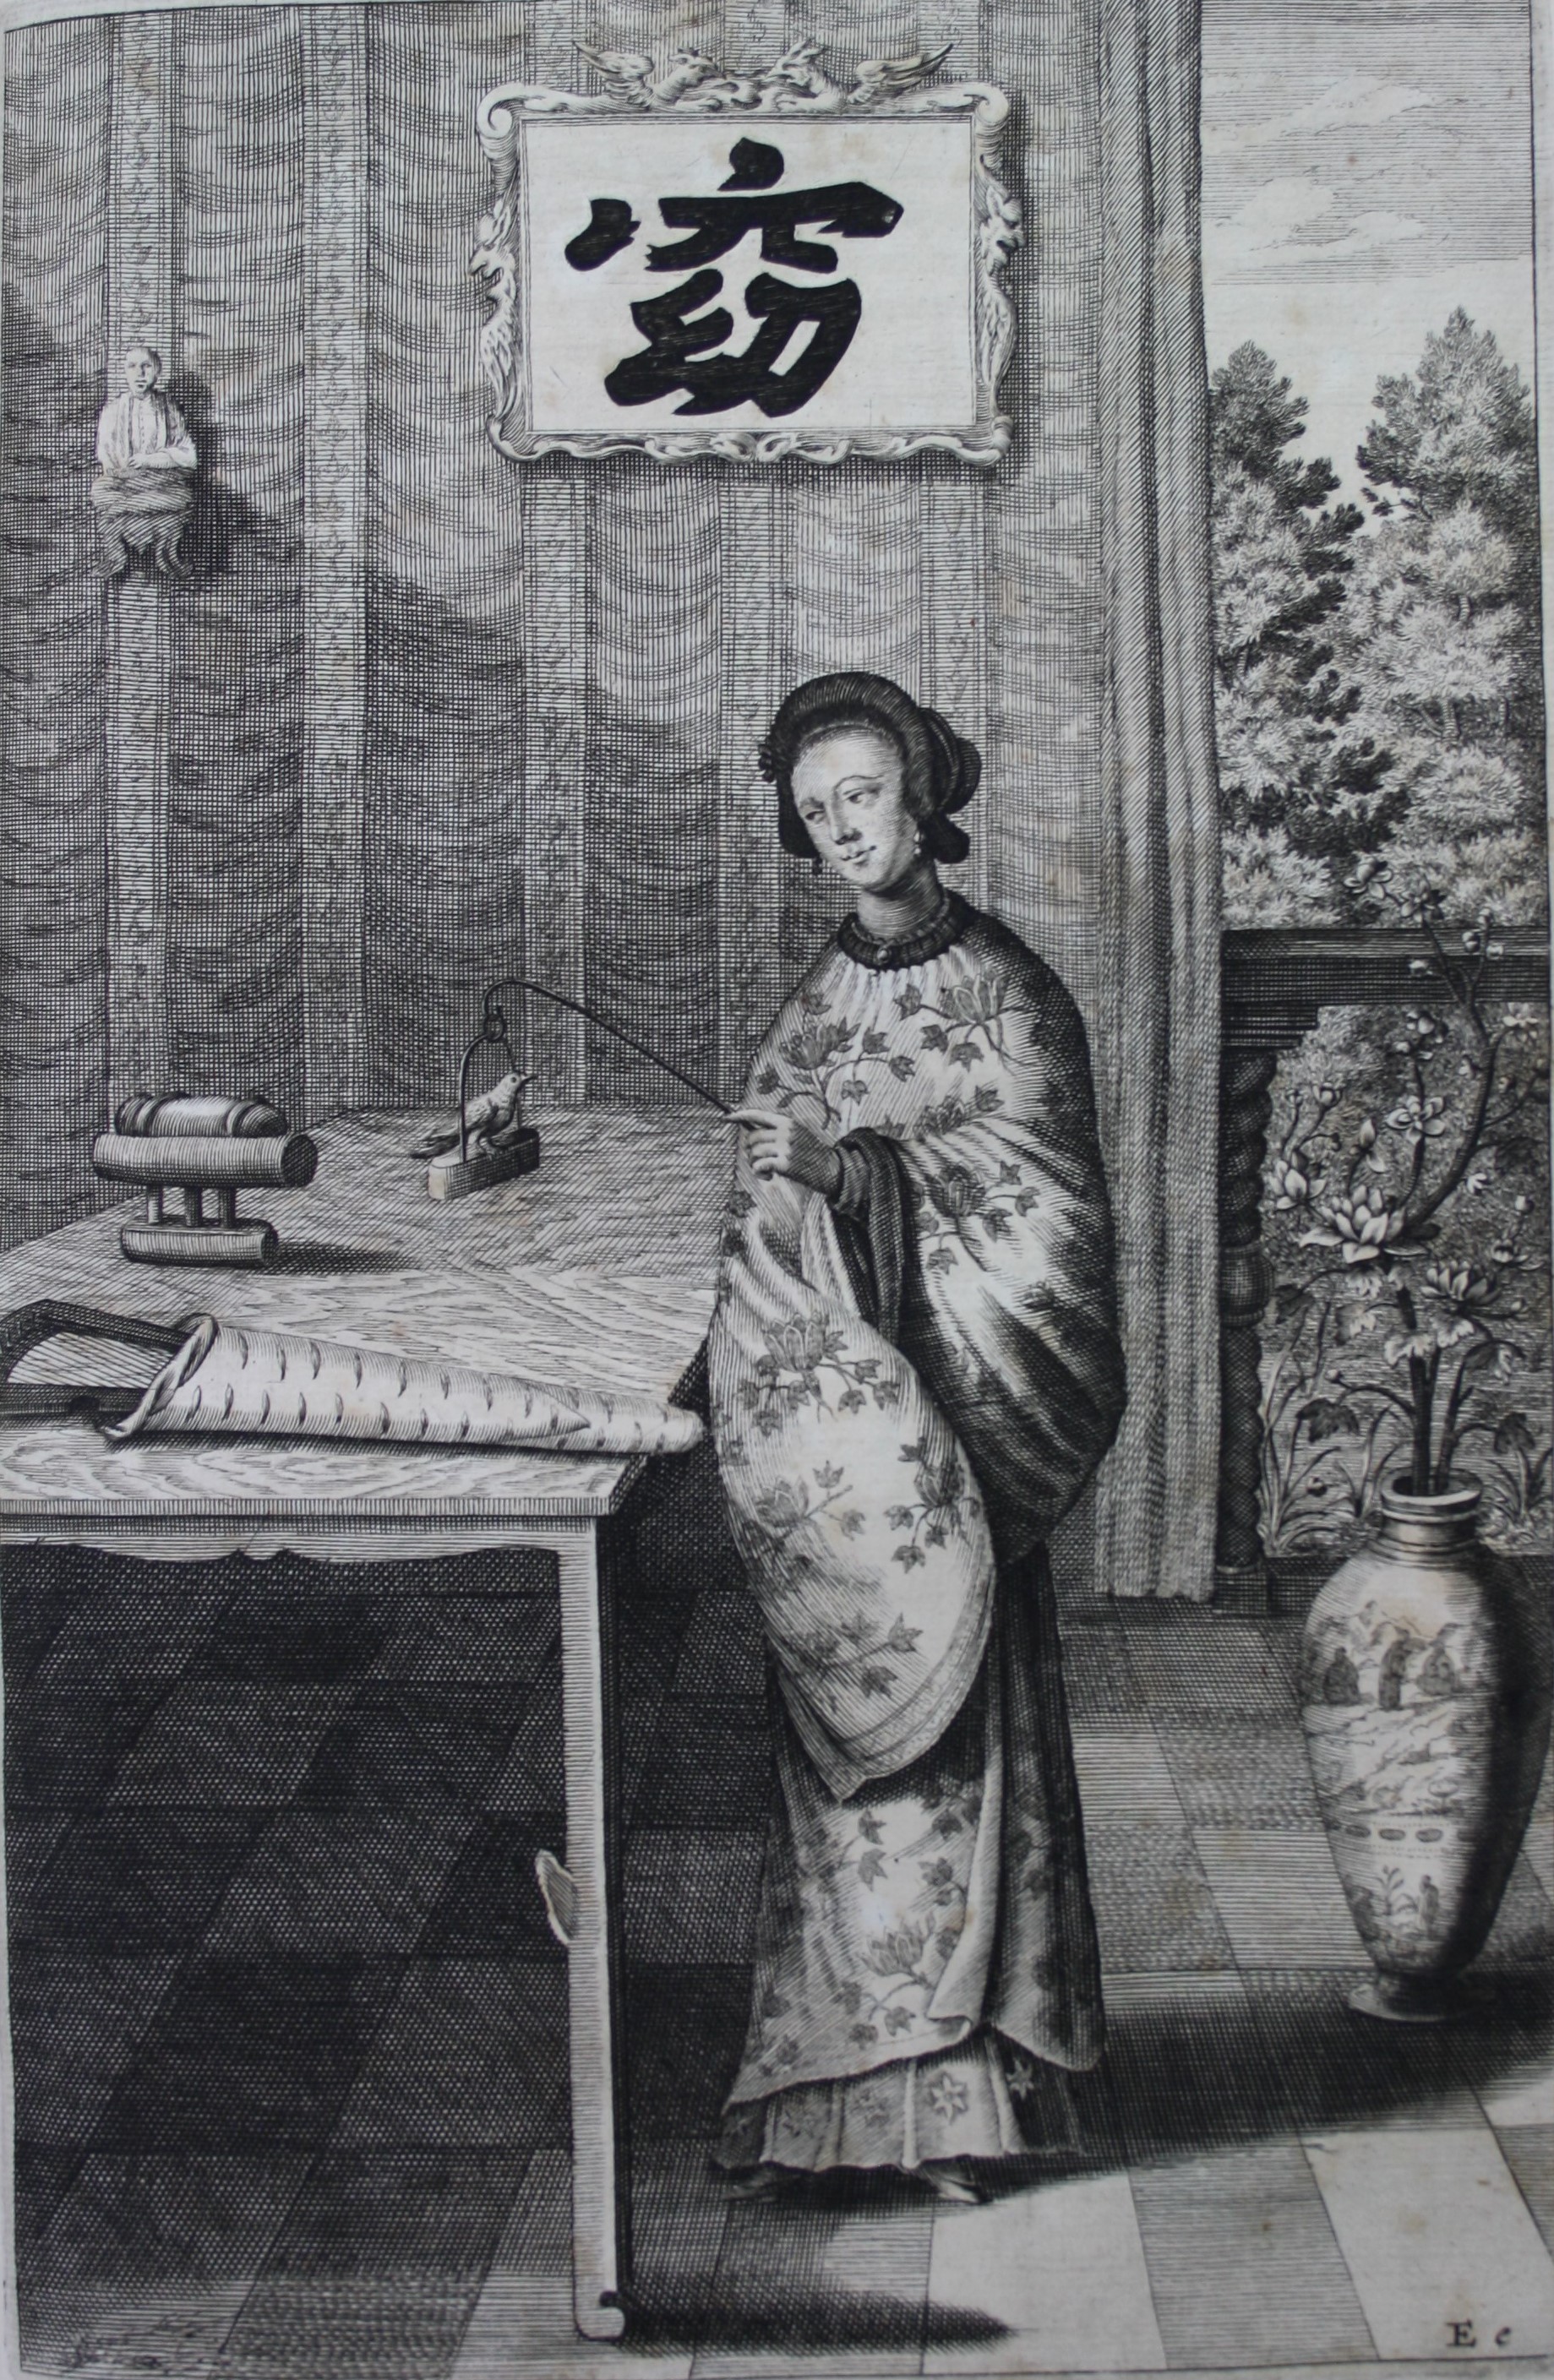 Vornehme Chinesin - Athansius Kircher, China monumentis illustrata Amsterdam 1667 (Martinus-Bibliothek Mainz, 16/789) (c) Martinus-Bibliothek